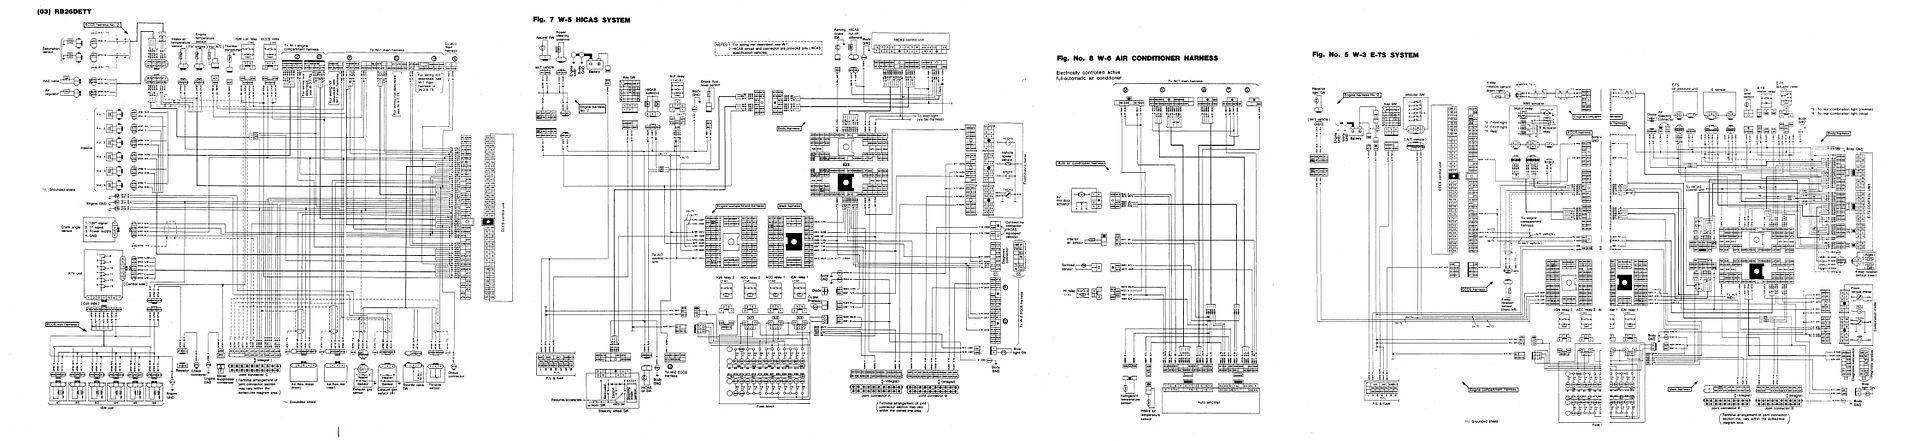 Nissan skyline r32 gtst wiring diagram #9